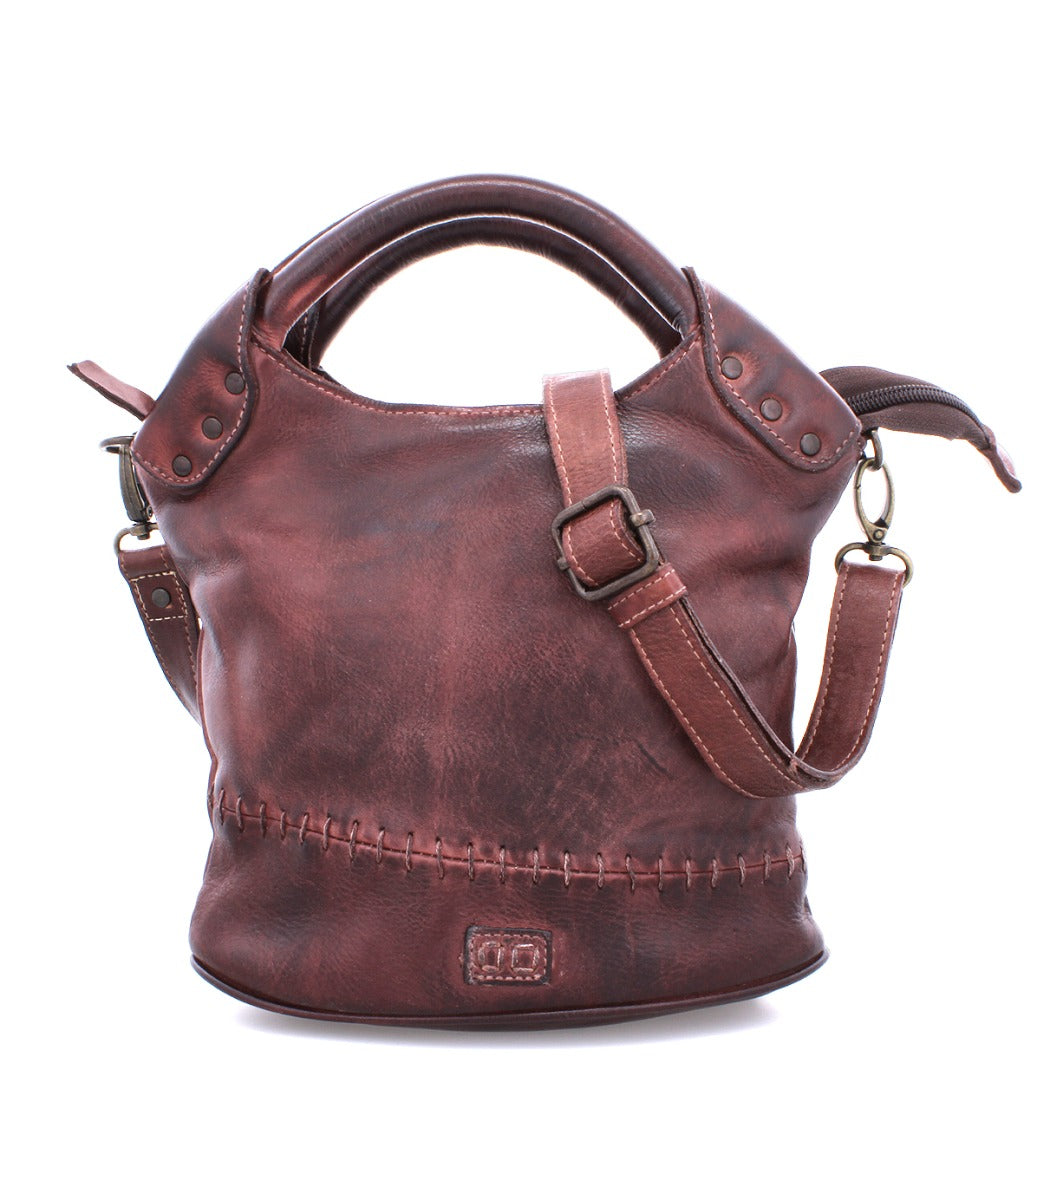 A brown leather Delilah handbag with a shoulder strap by Bed Stu.